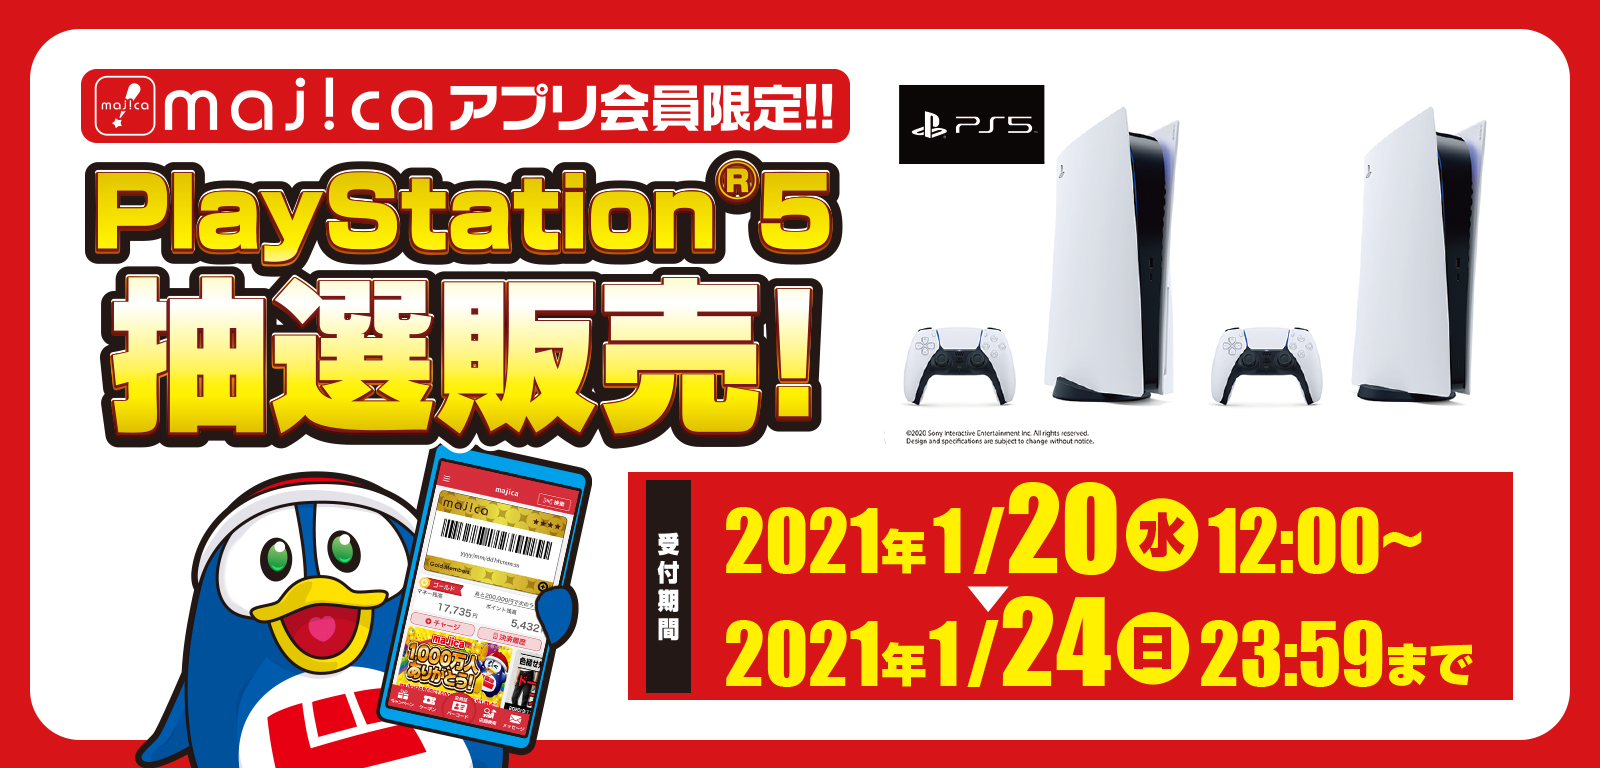 majicaアプリ会員限定！！PlayStation®5抽選販売！ 受付期間2021年1/20 12:00~1/24 23:59まで